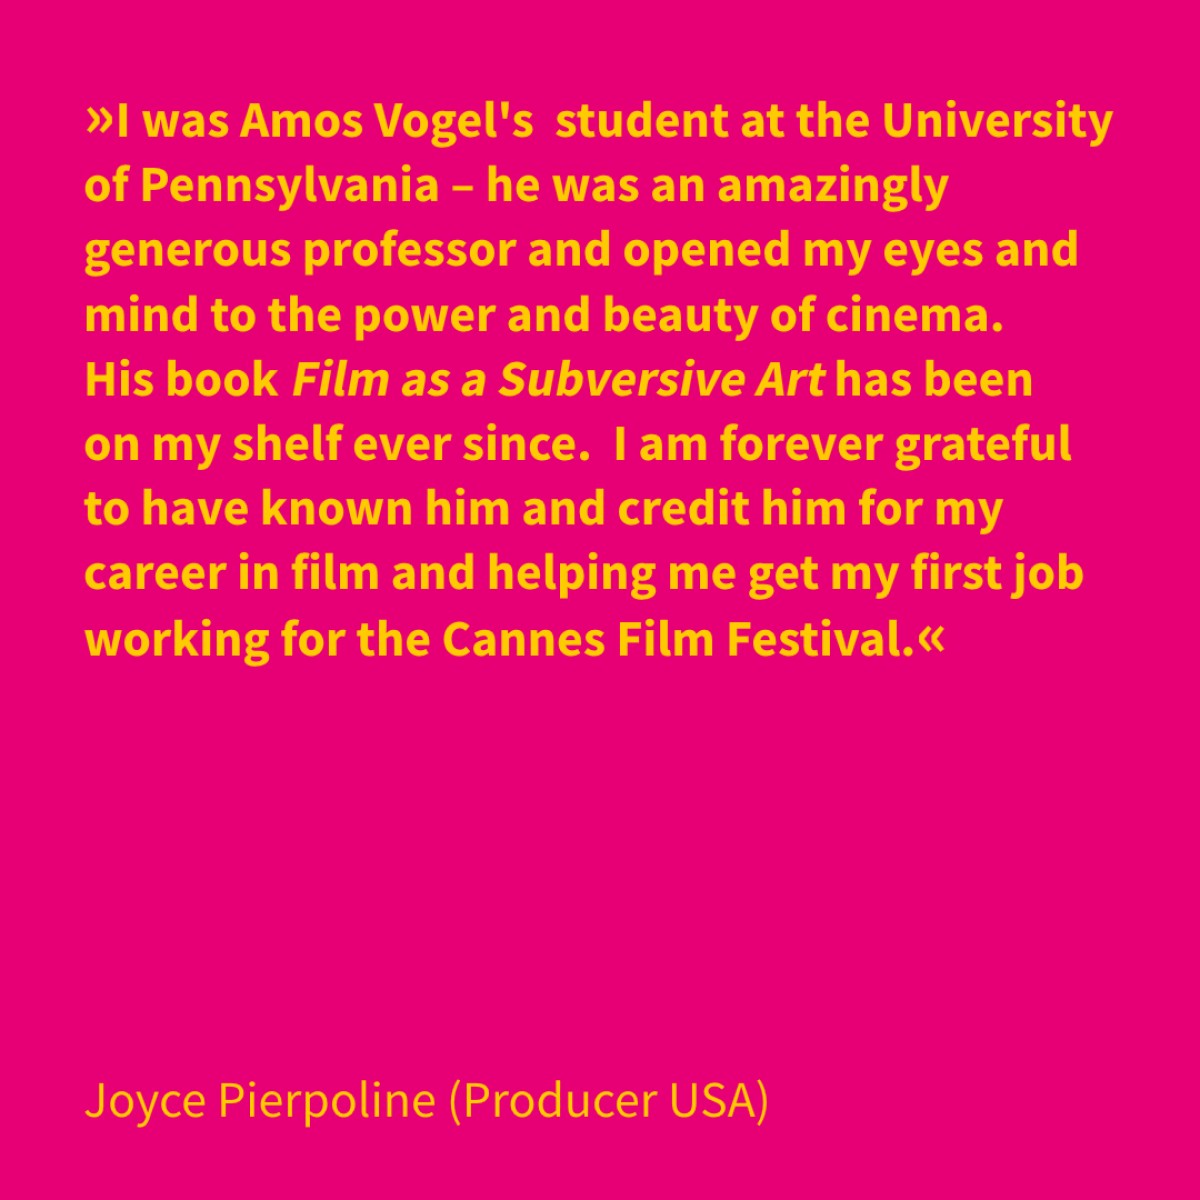 Joyce Pierpoline (Producer USA)